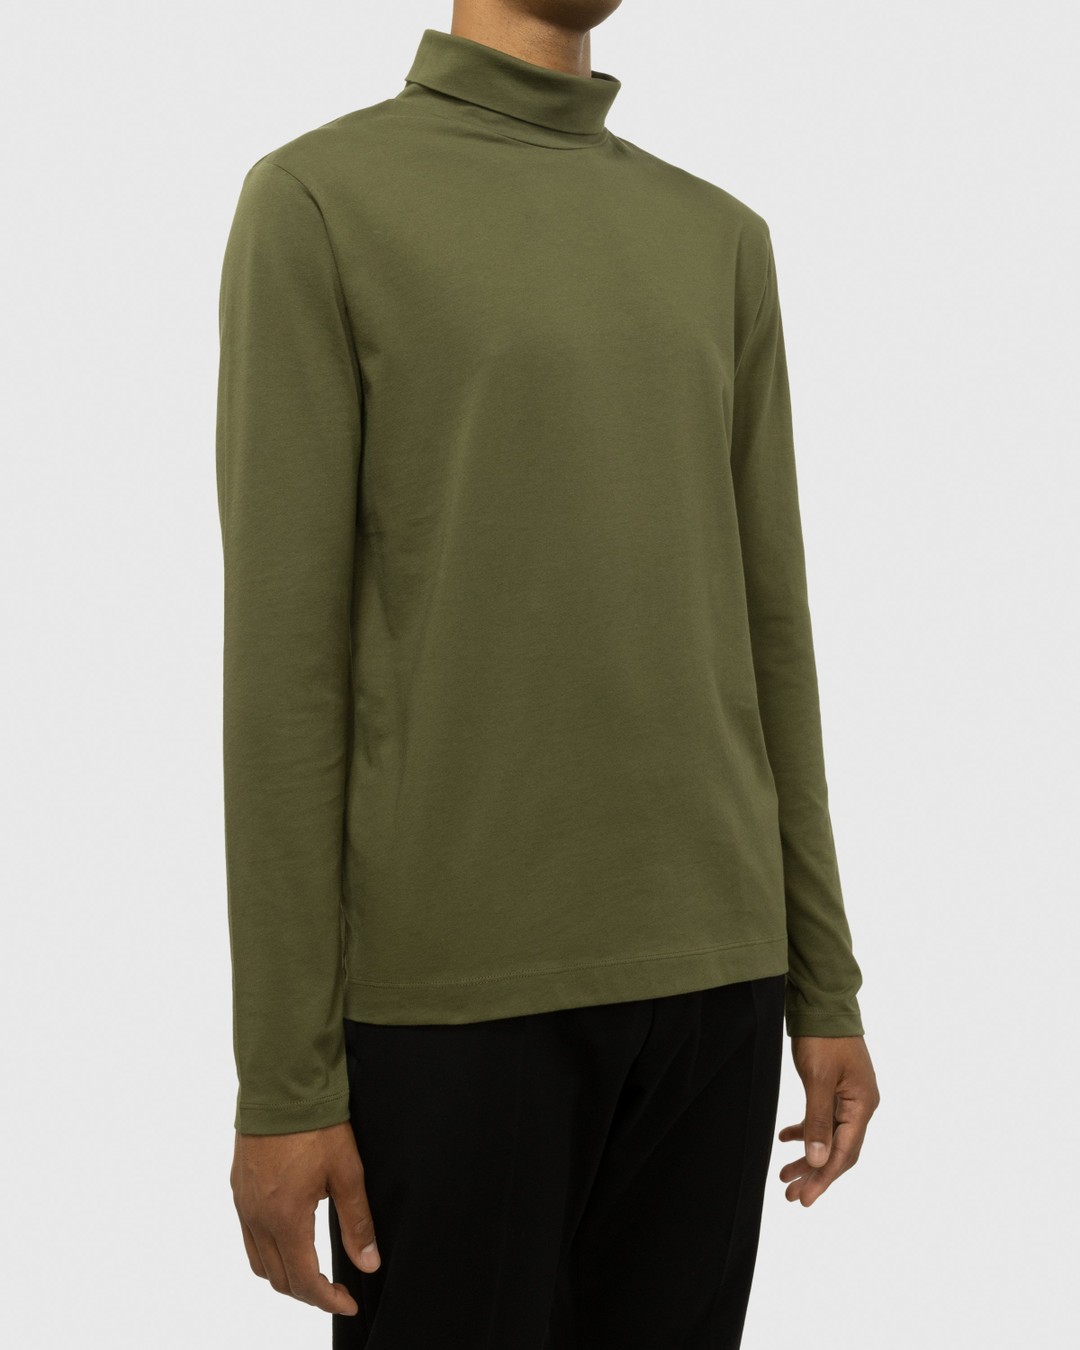 Dries van Noten – Heyzo Turtleneck Jersey Shirt Green - Turtlenecks - Green - Image 3